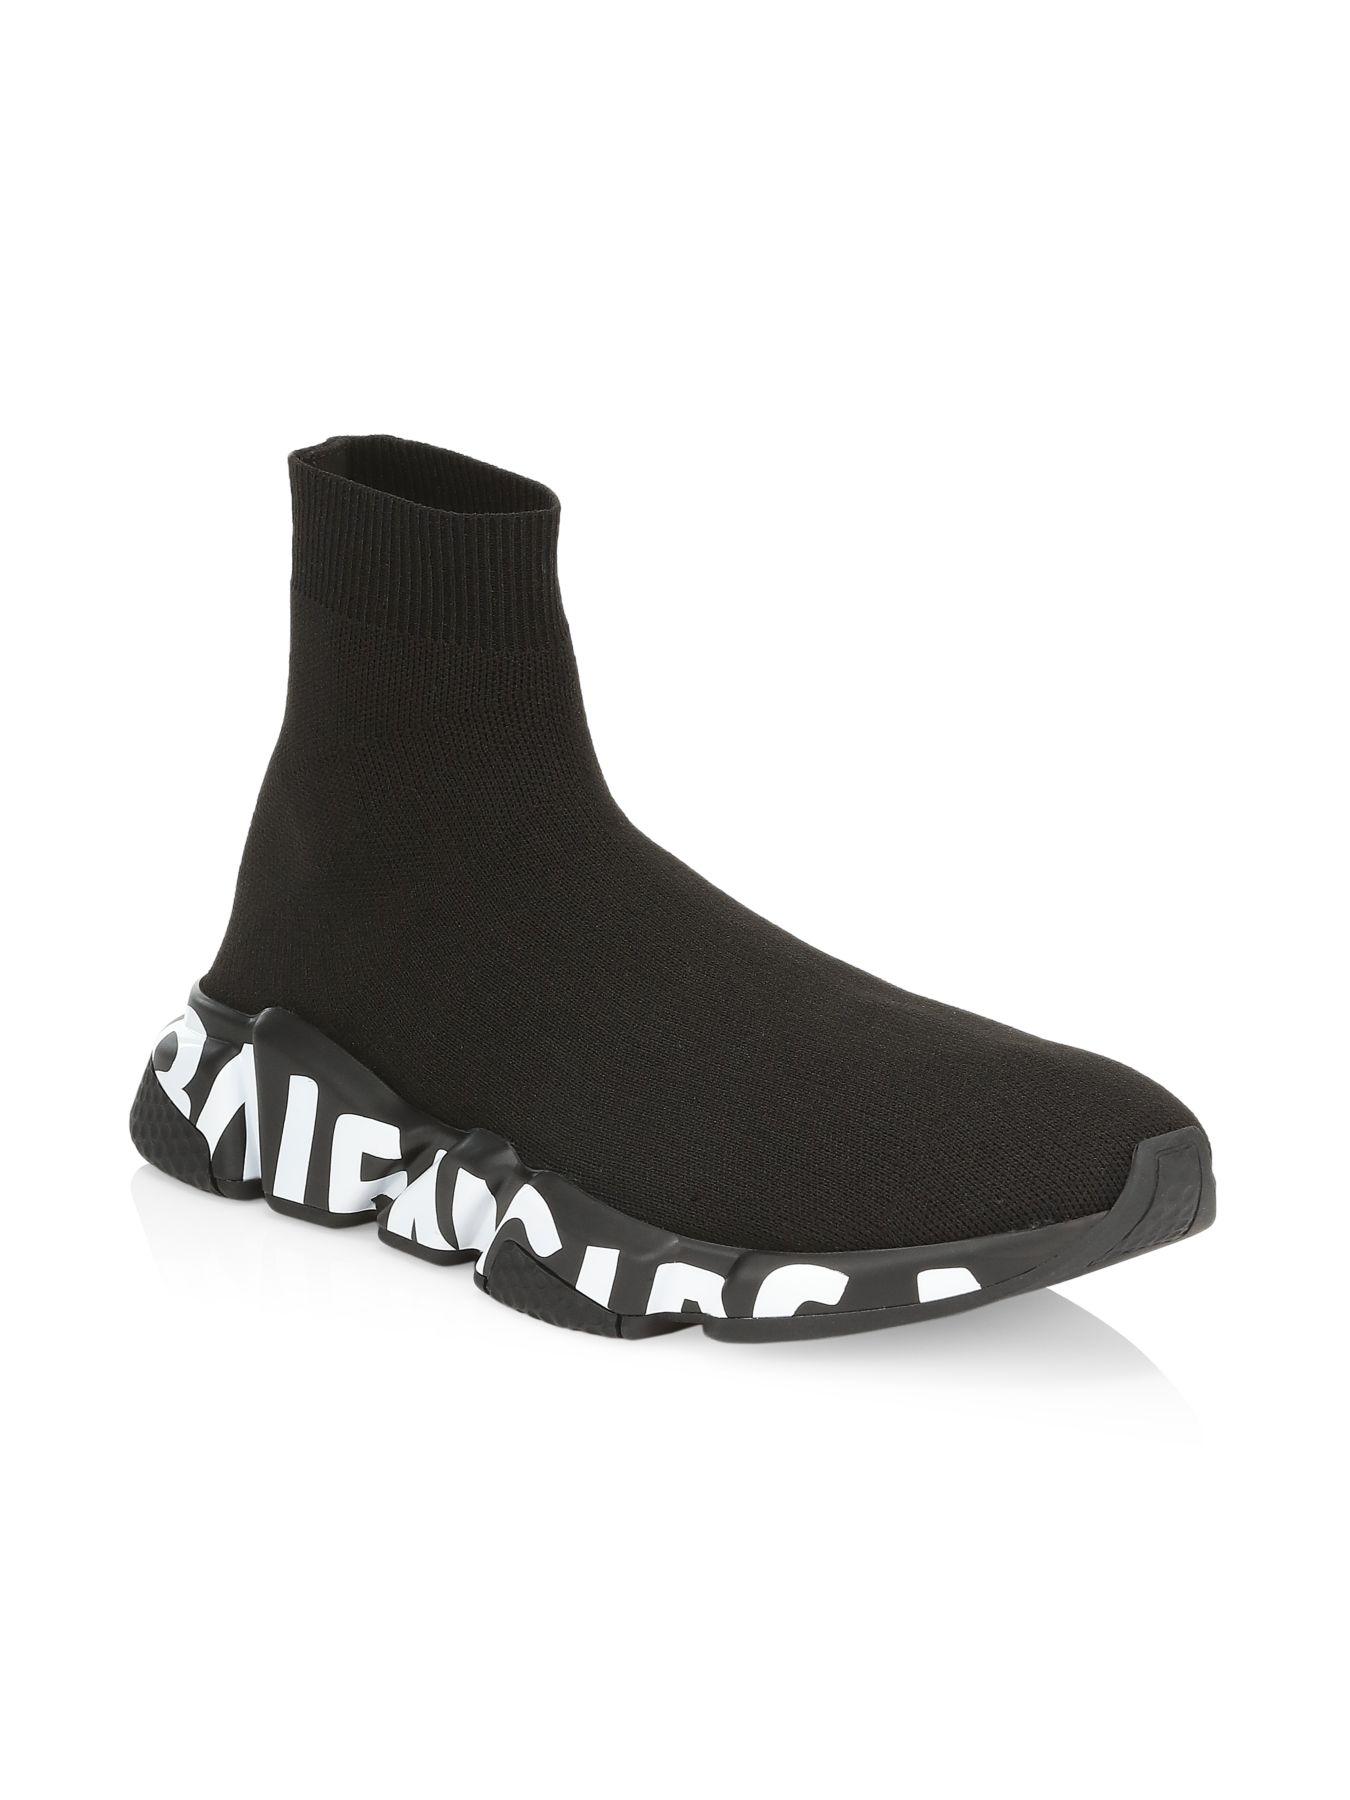 Balenciaga Rubber Black Graffiti Sole Speed Runner Sneakers for Men ...